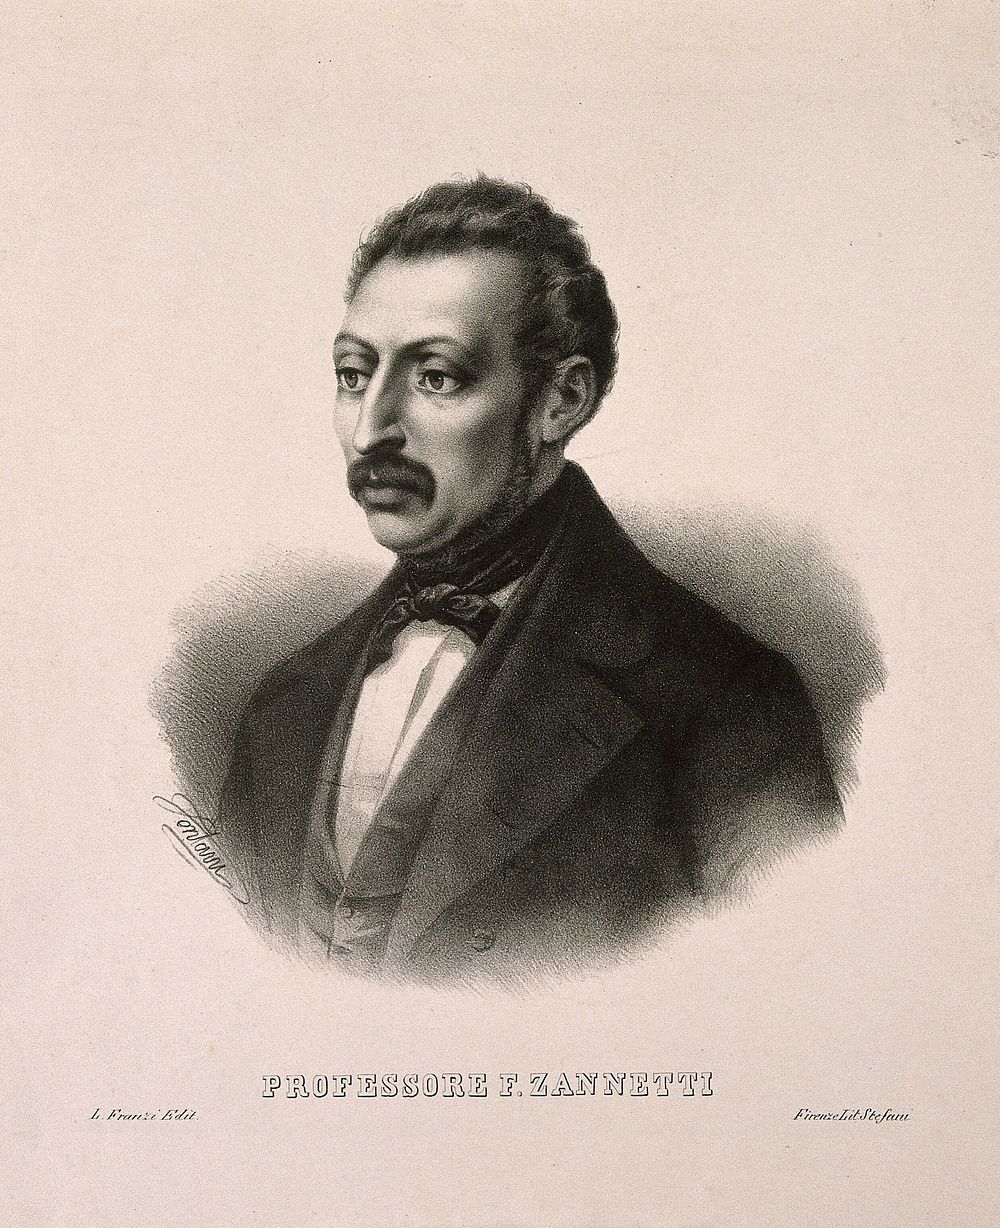 Ferdinando Zannetti. Lithograph by N. Fontani.